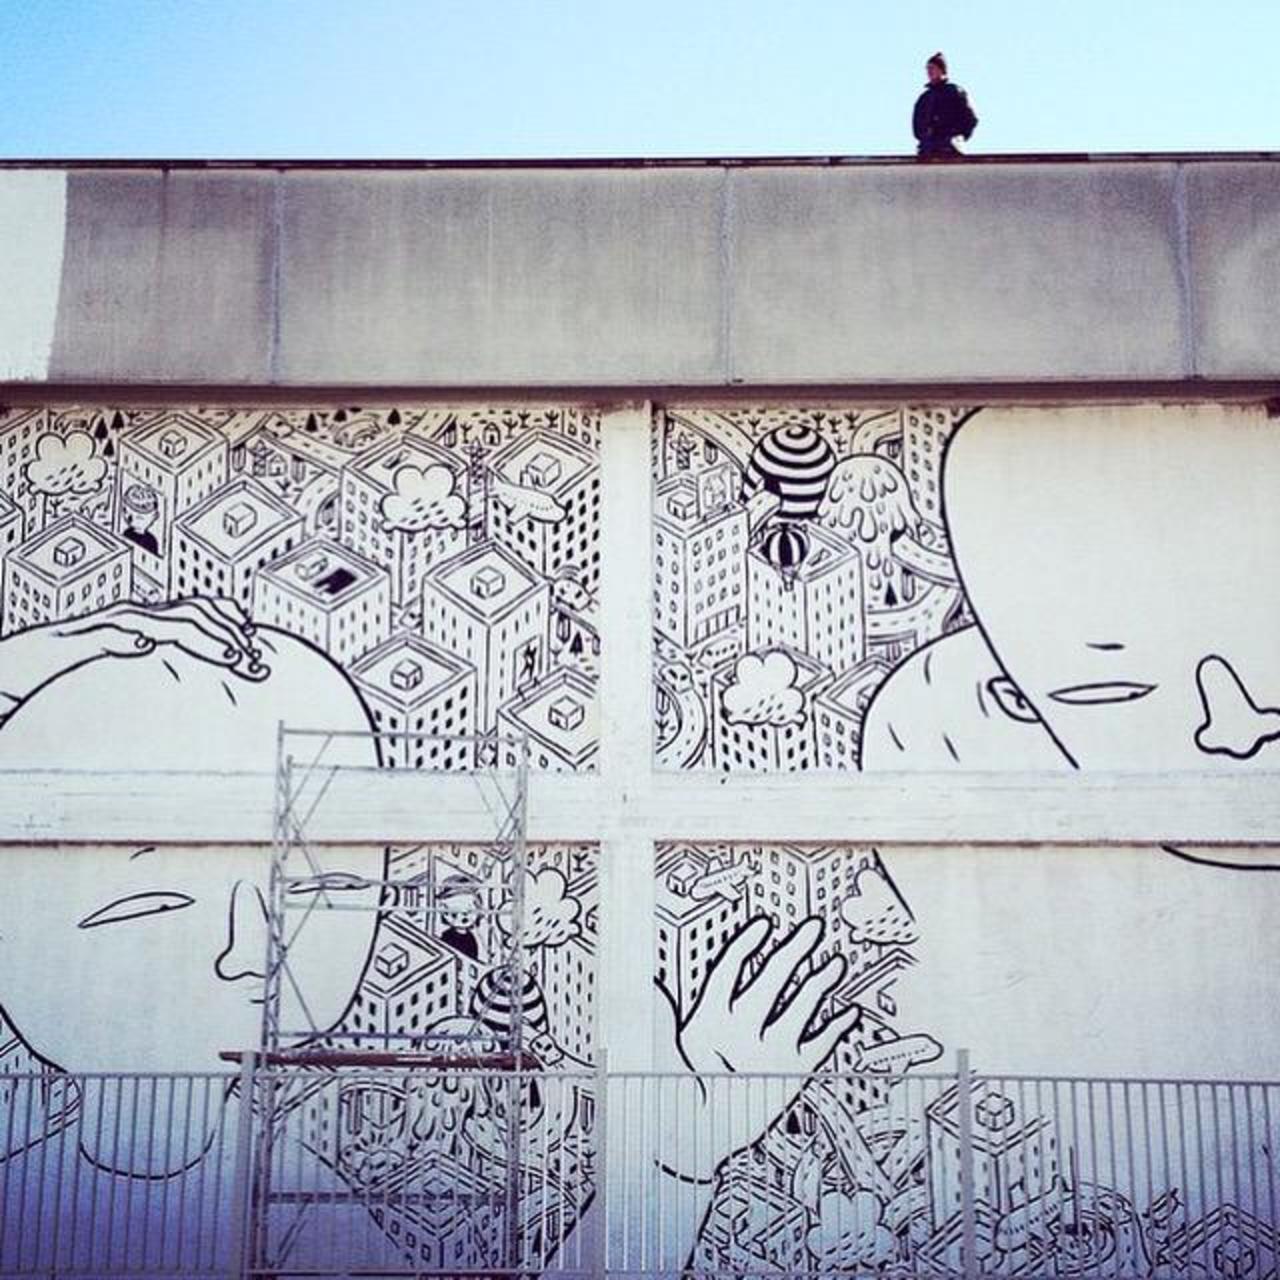 Grande #artist #millo 's #wip #mural in Battipaglia, #Italy #urbanart #streetart #graffiti http://t.co/y8g4W0SM4T